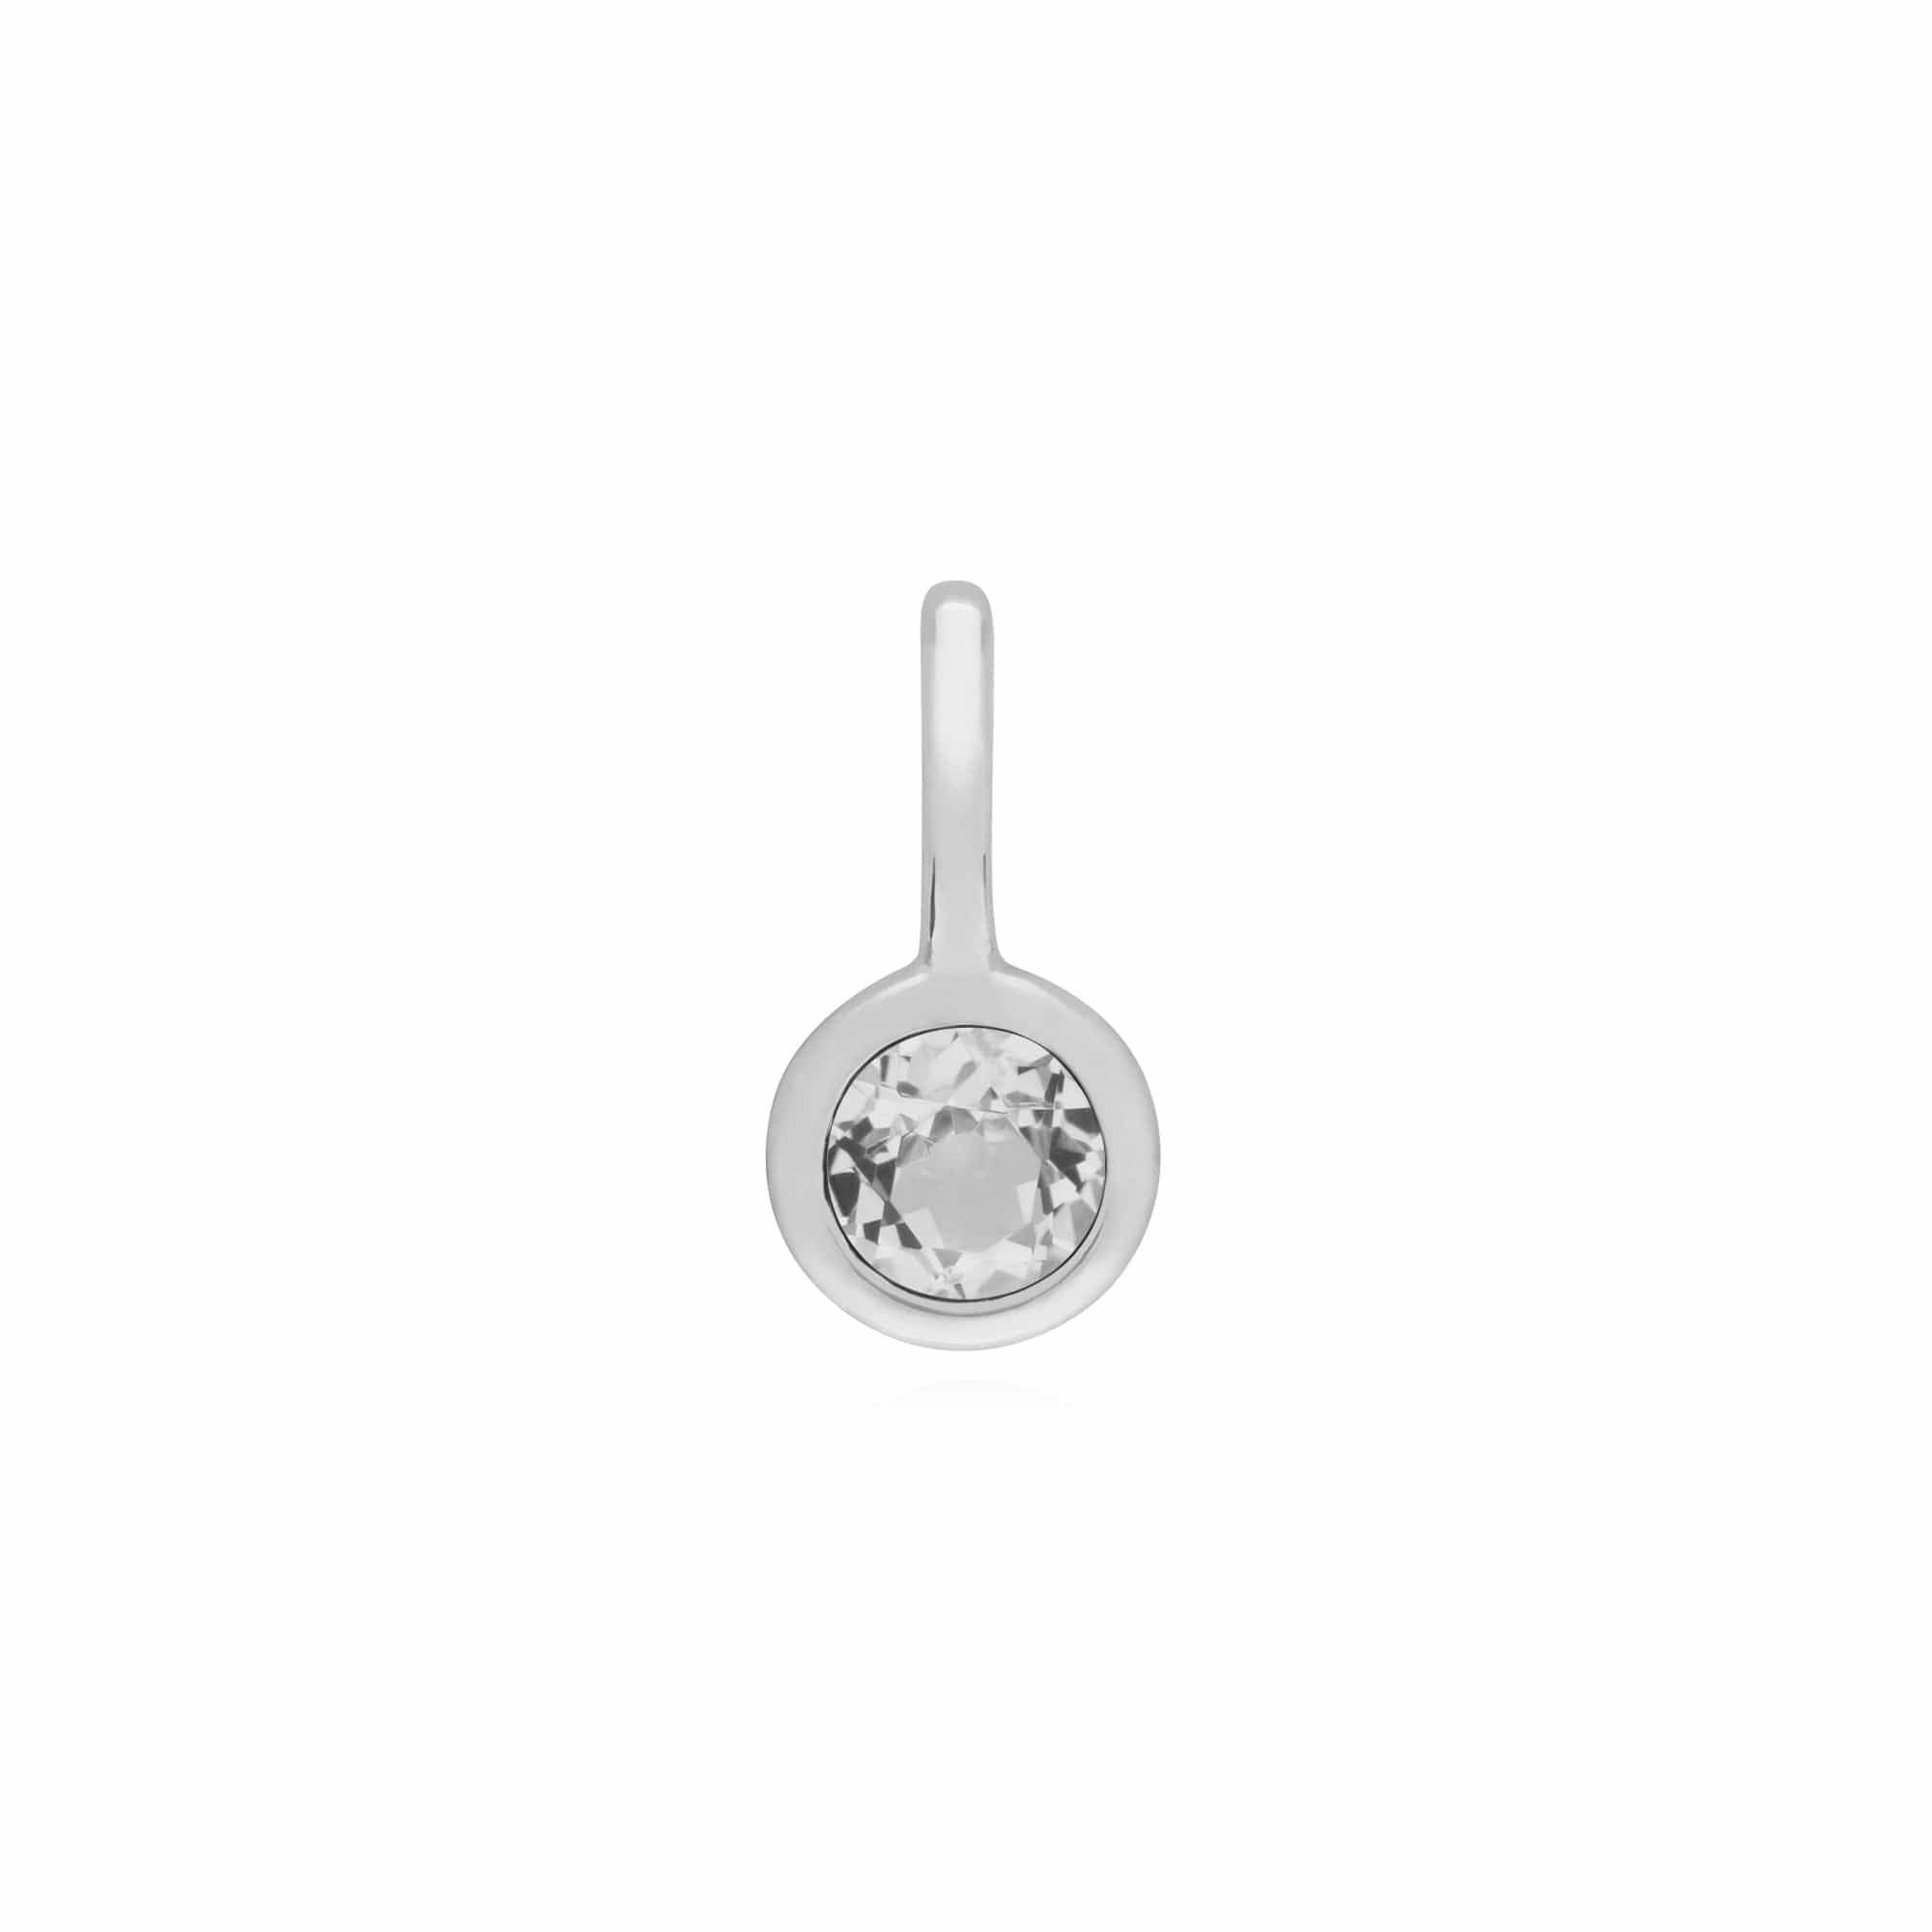 270P027608925-270P026601925 Classic Swirl Heart Lock Pendant & Clear Topaz Charm in 925 Sterling Silver 2